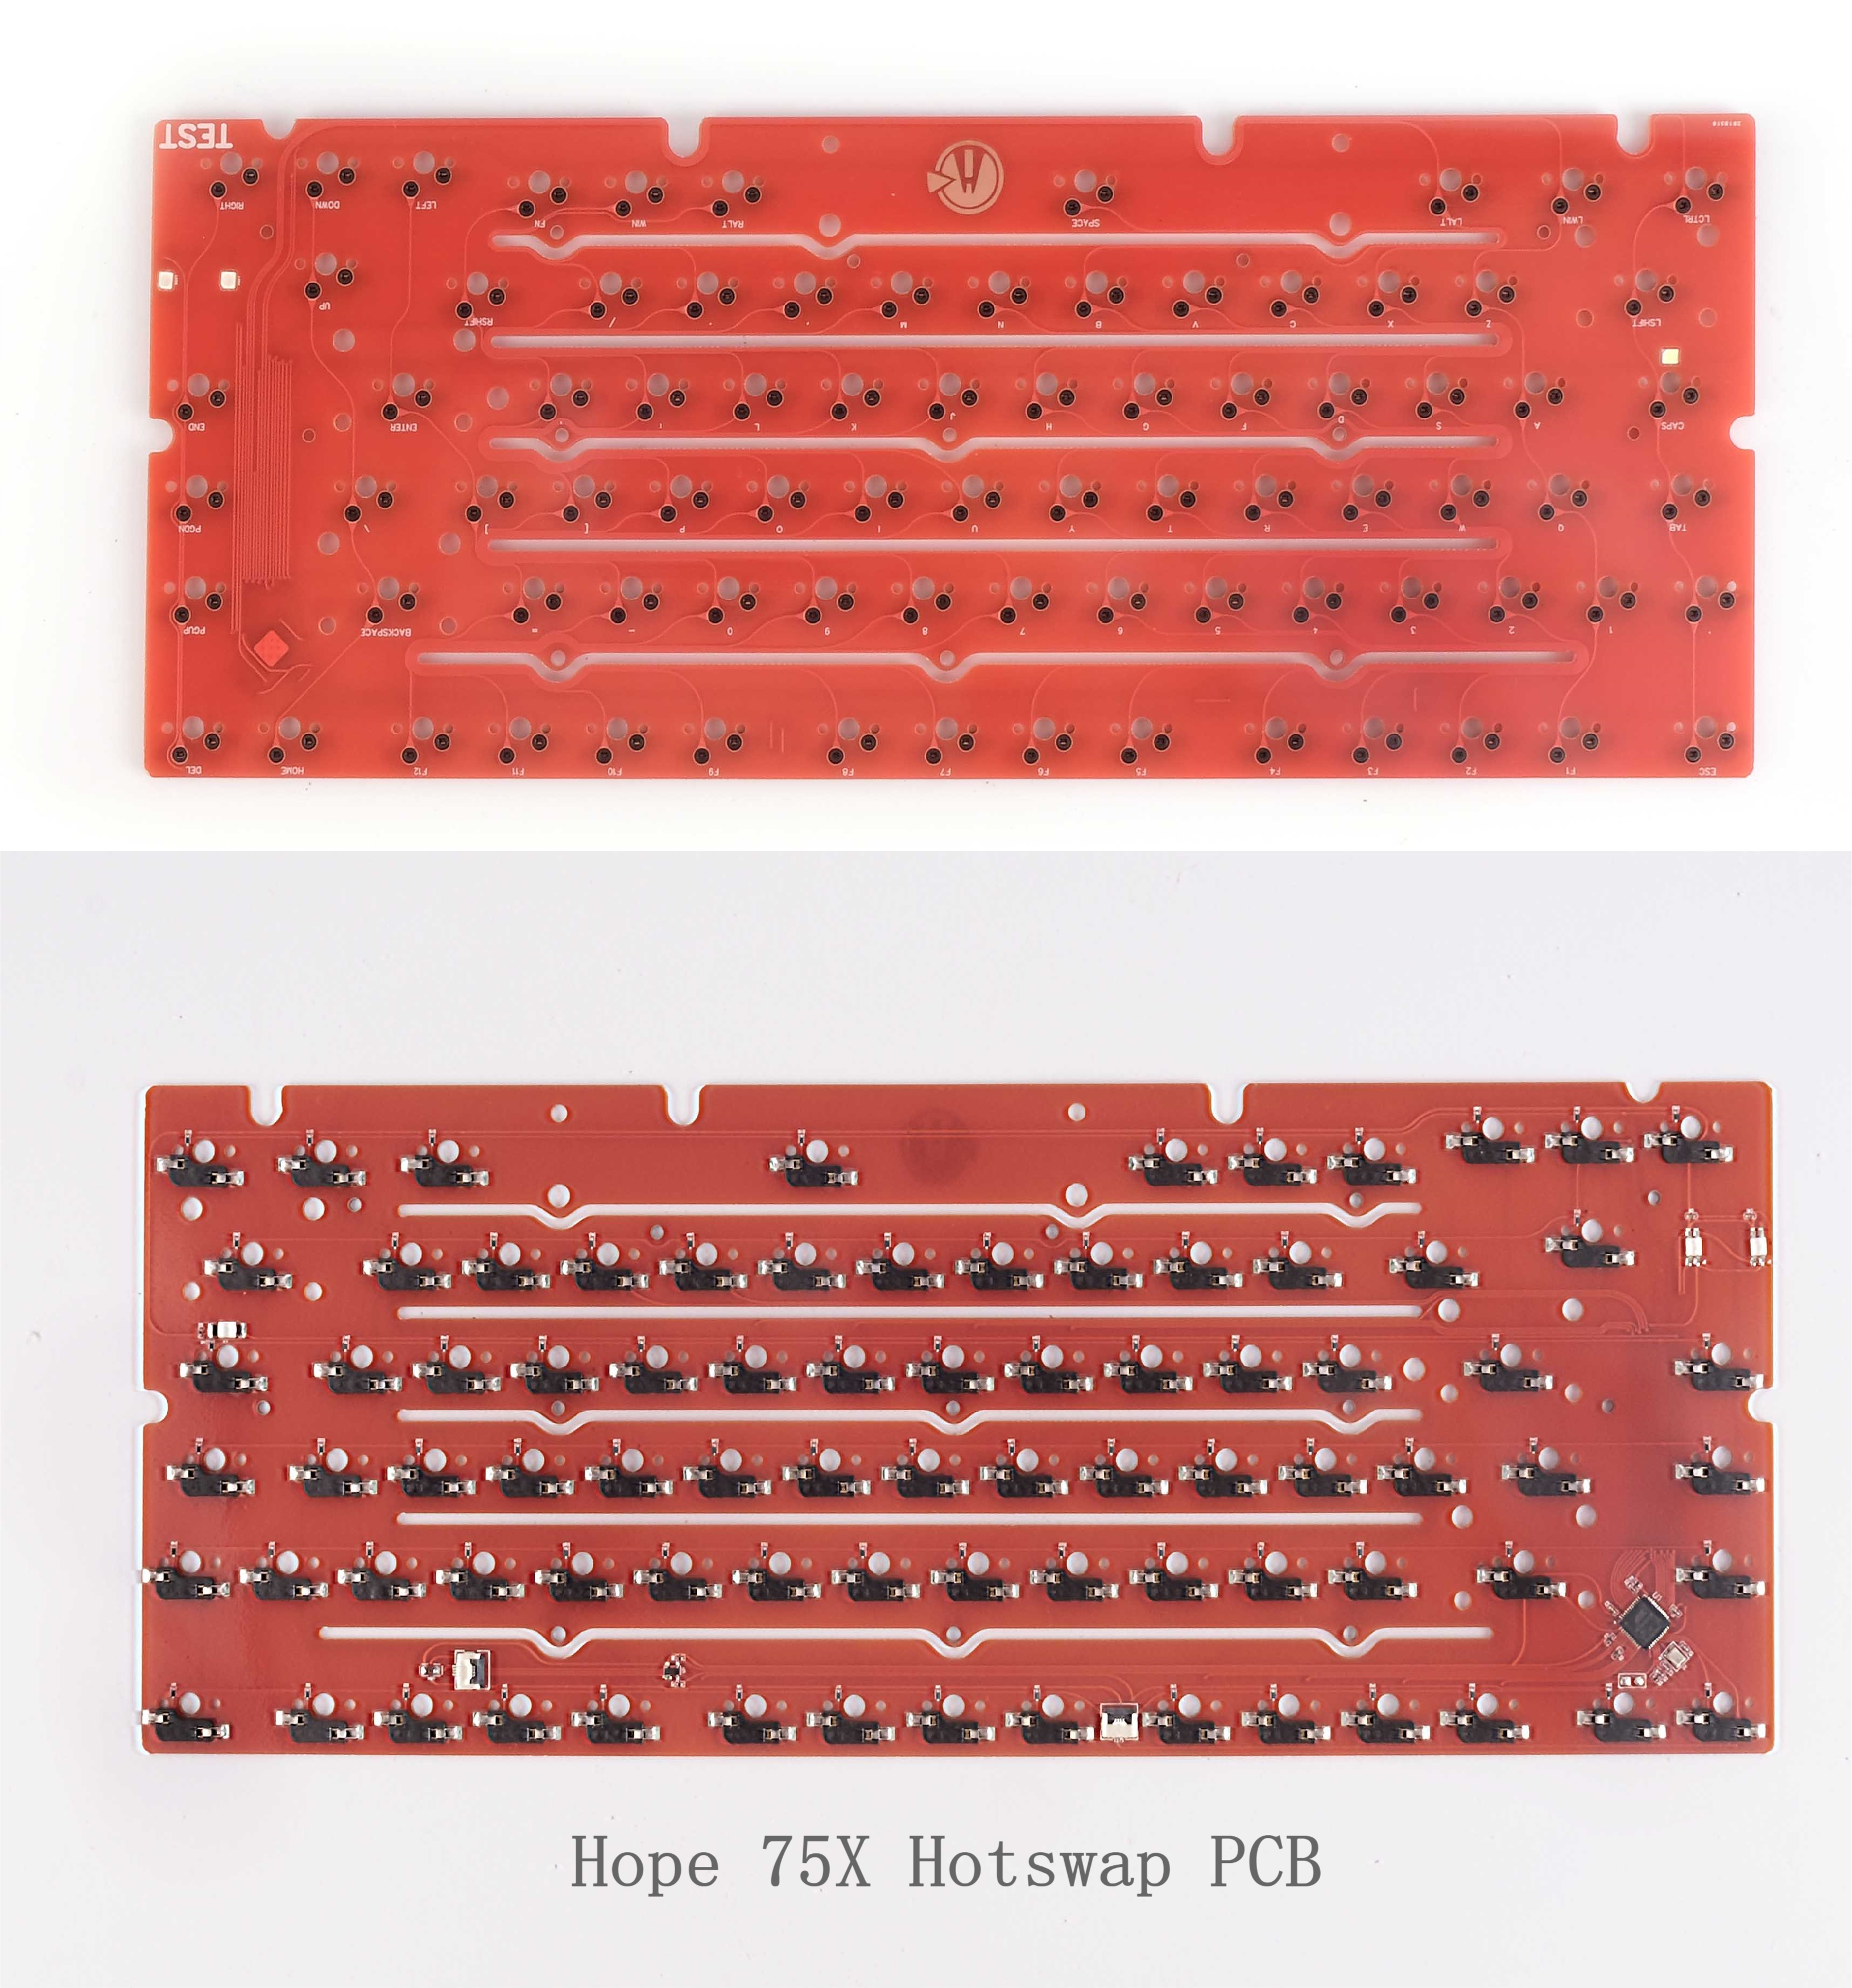 [EXTRA] HOPE75X HOTSWAP PCB